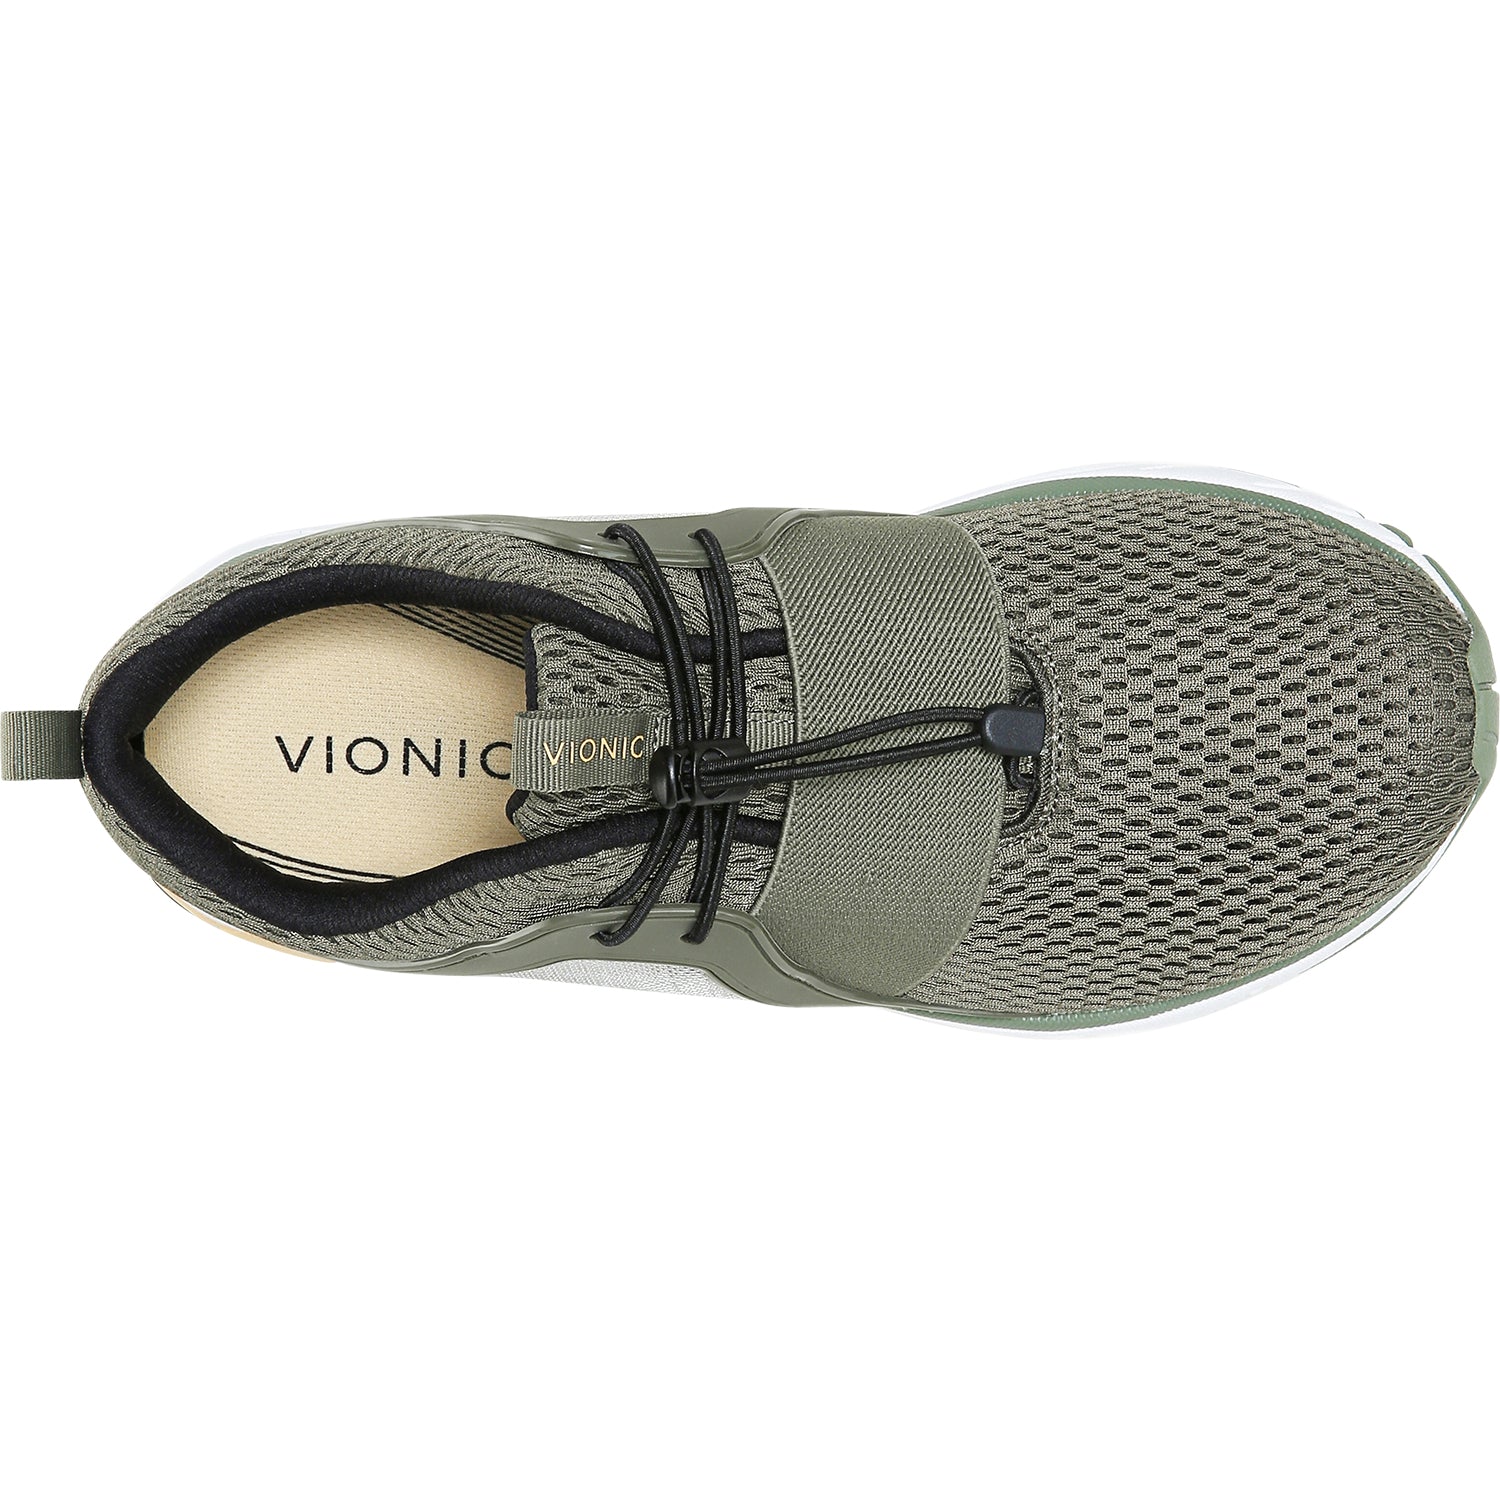 kalv filosofi presse Vionic Berlin Olive | Women's Orthotic Sneakers | Footwear etc.